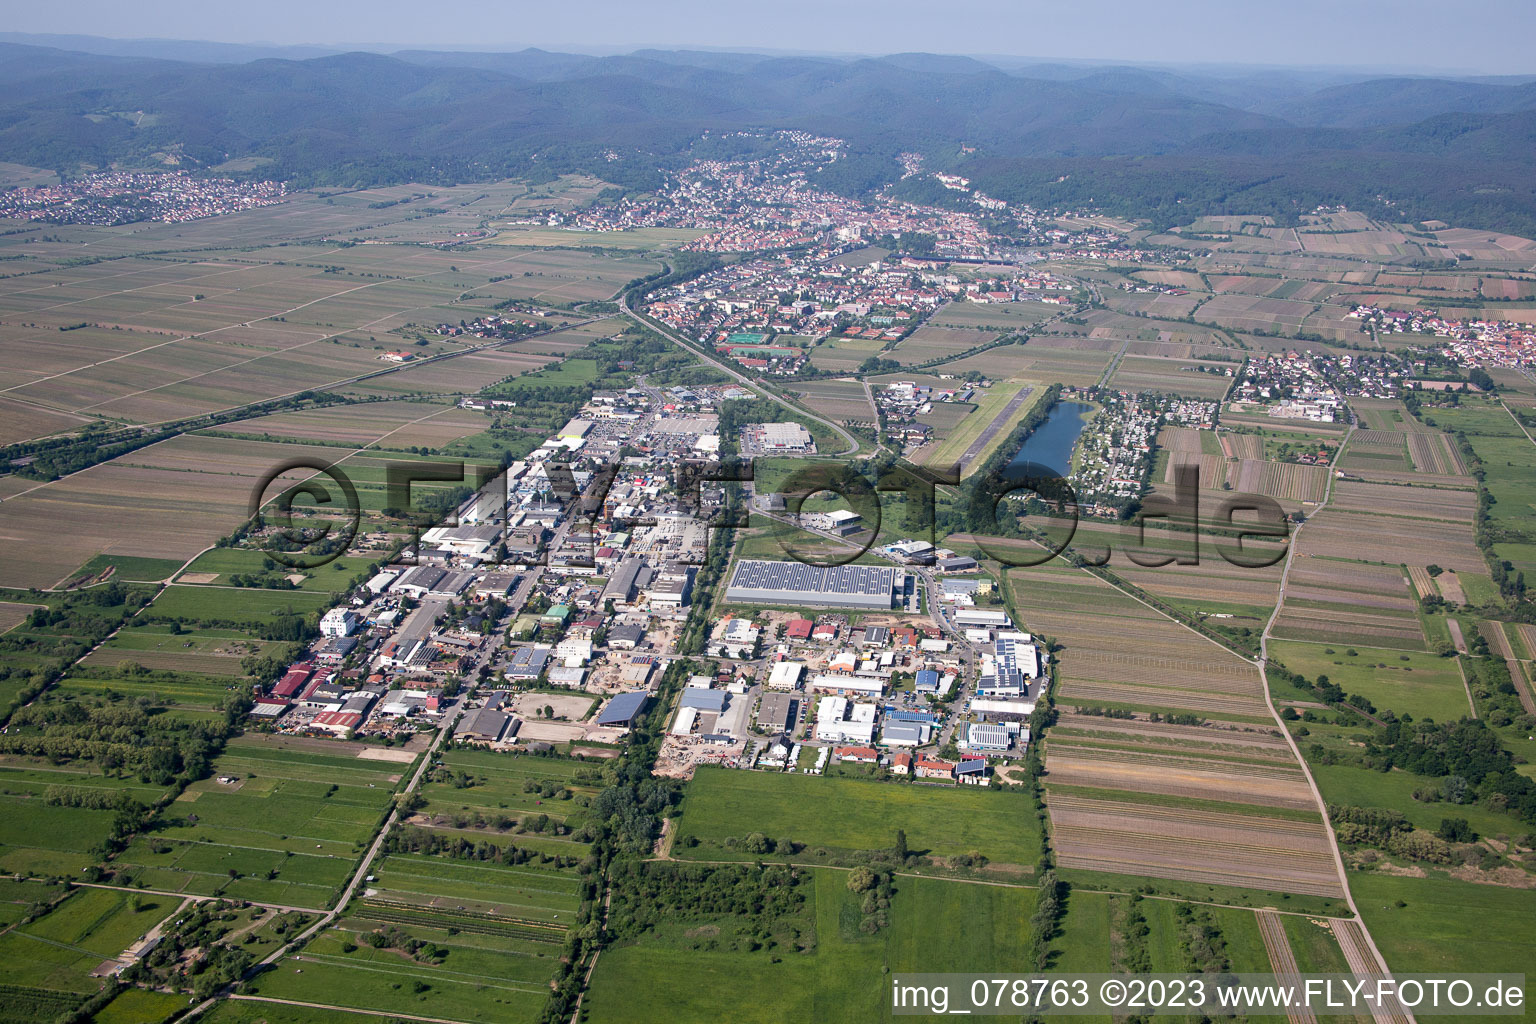 Aerial view of Industrial area Bruchstr in Bad Dürkheim in the state Rhineland-Palatinate, Germany